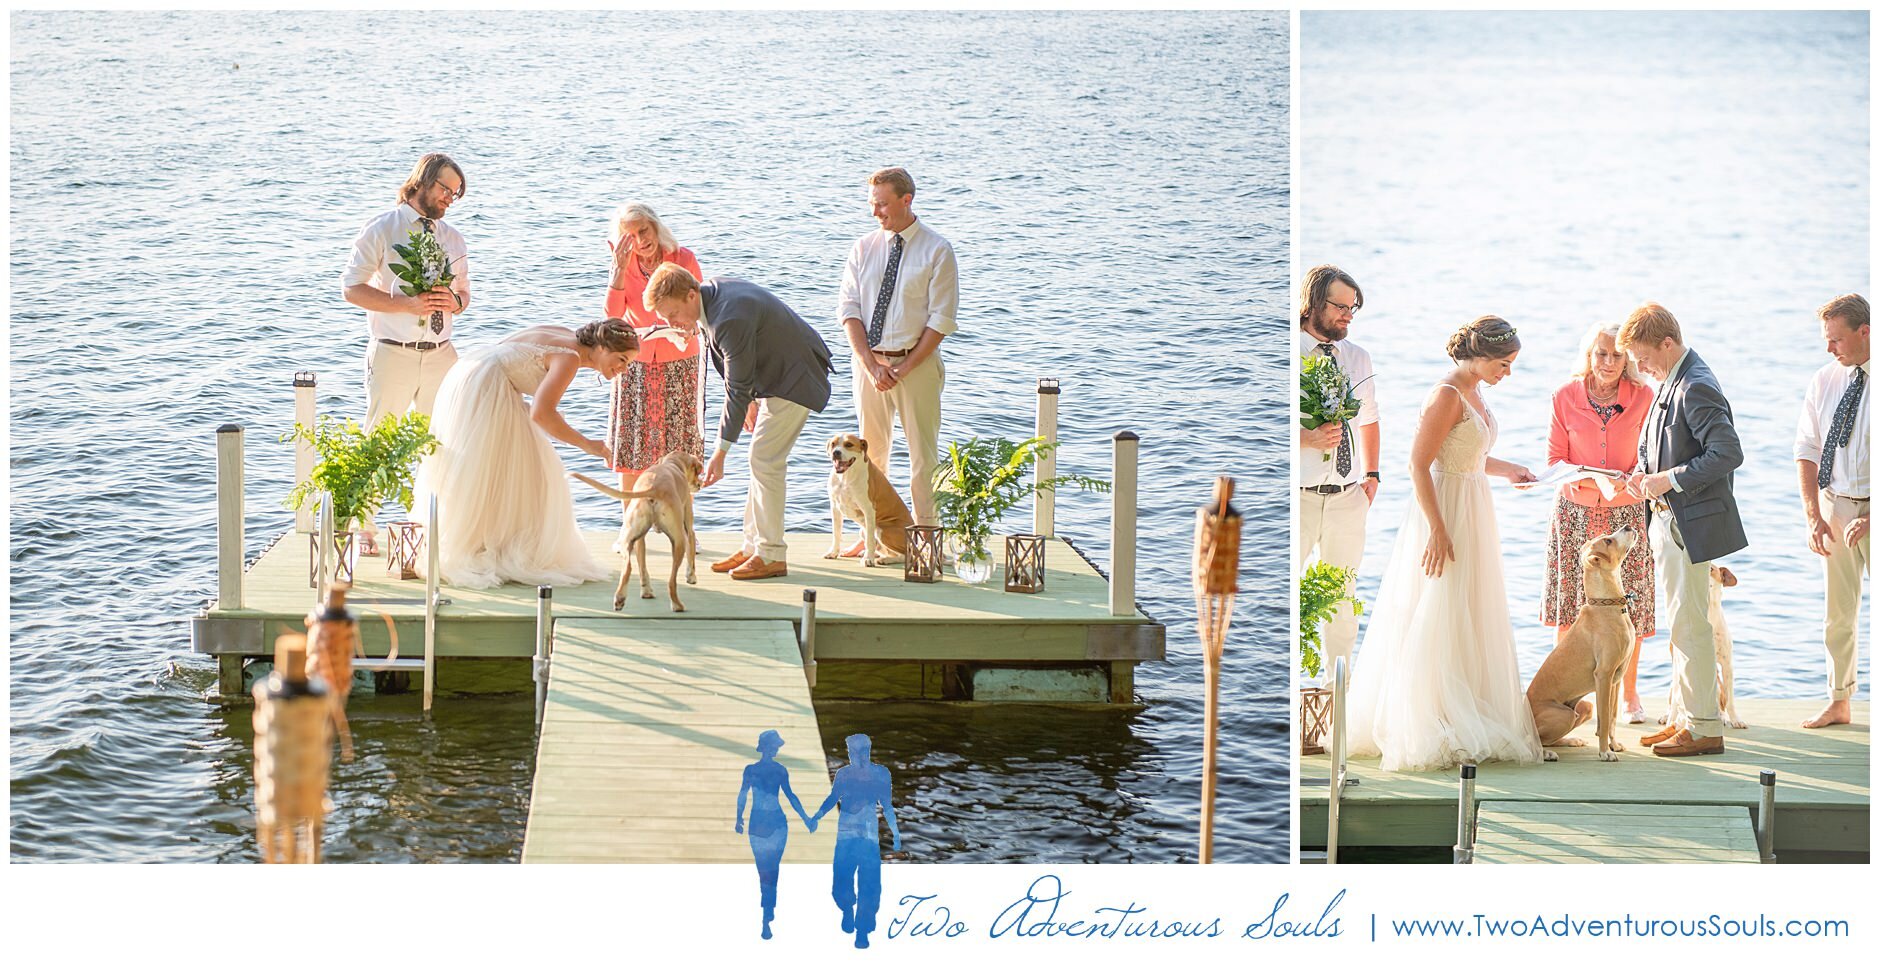 Lake Cobbosseeconte Wedding, Manchester Maine, Maine Lake Wedding Photographer, Two Adventurous Souls - 080820_0017.jpg